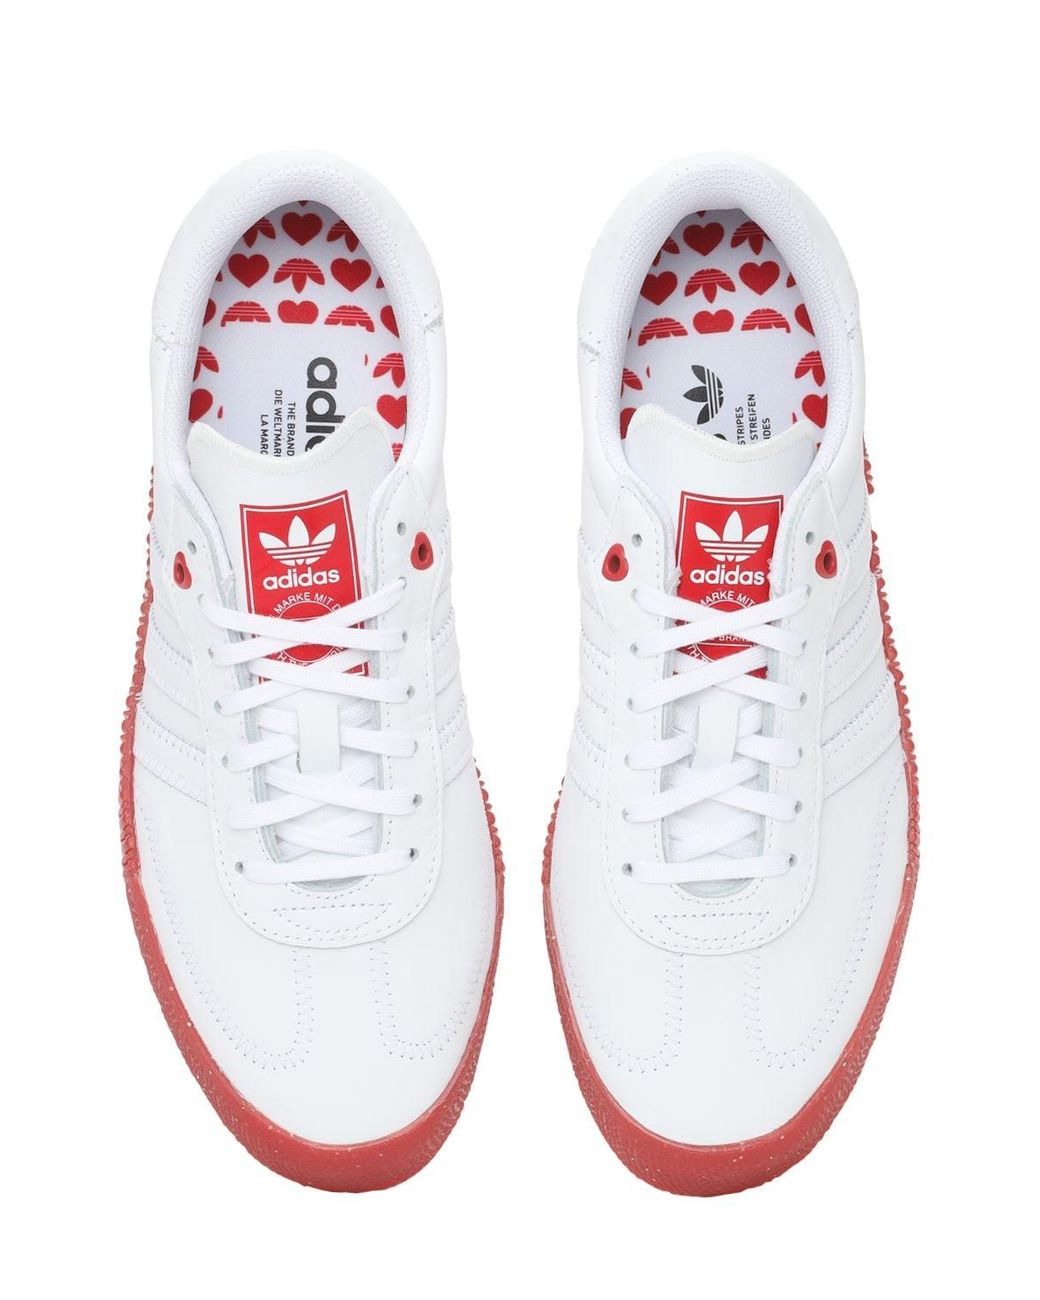 adidas Originals Leather Valentines Sambarose Sneakers in White | Lyst